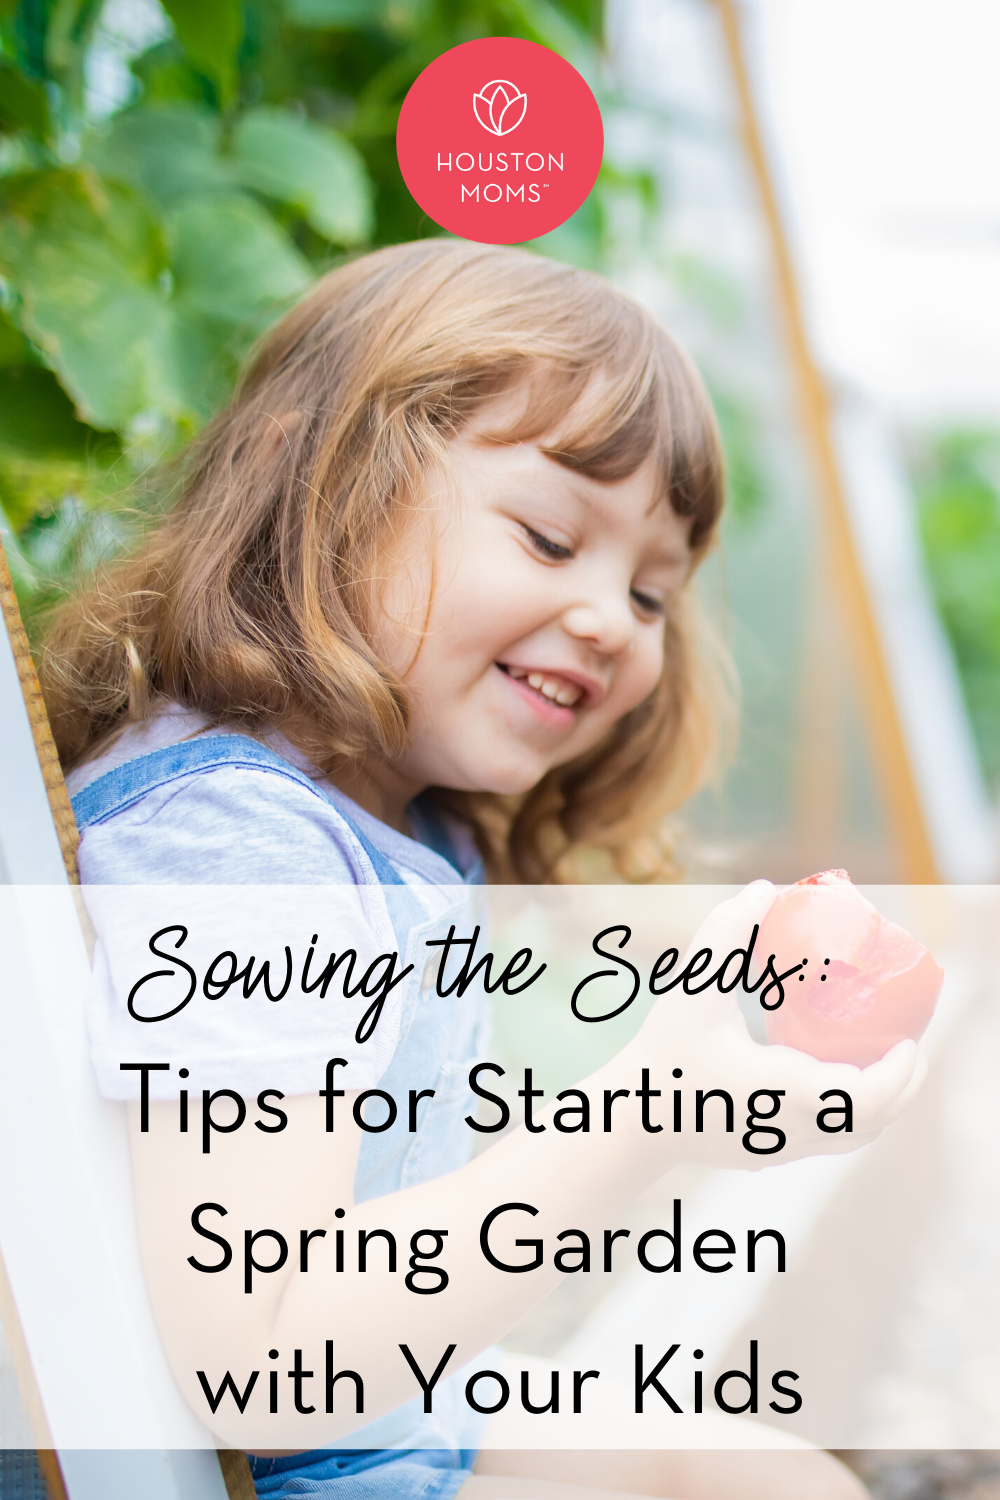 Houston Moms "Sowing the Seeds:: Tips for Starting a Spring Garden with Your Kids" #houstonmomsblog #houstonmoms #momsaroundhouston